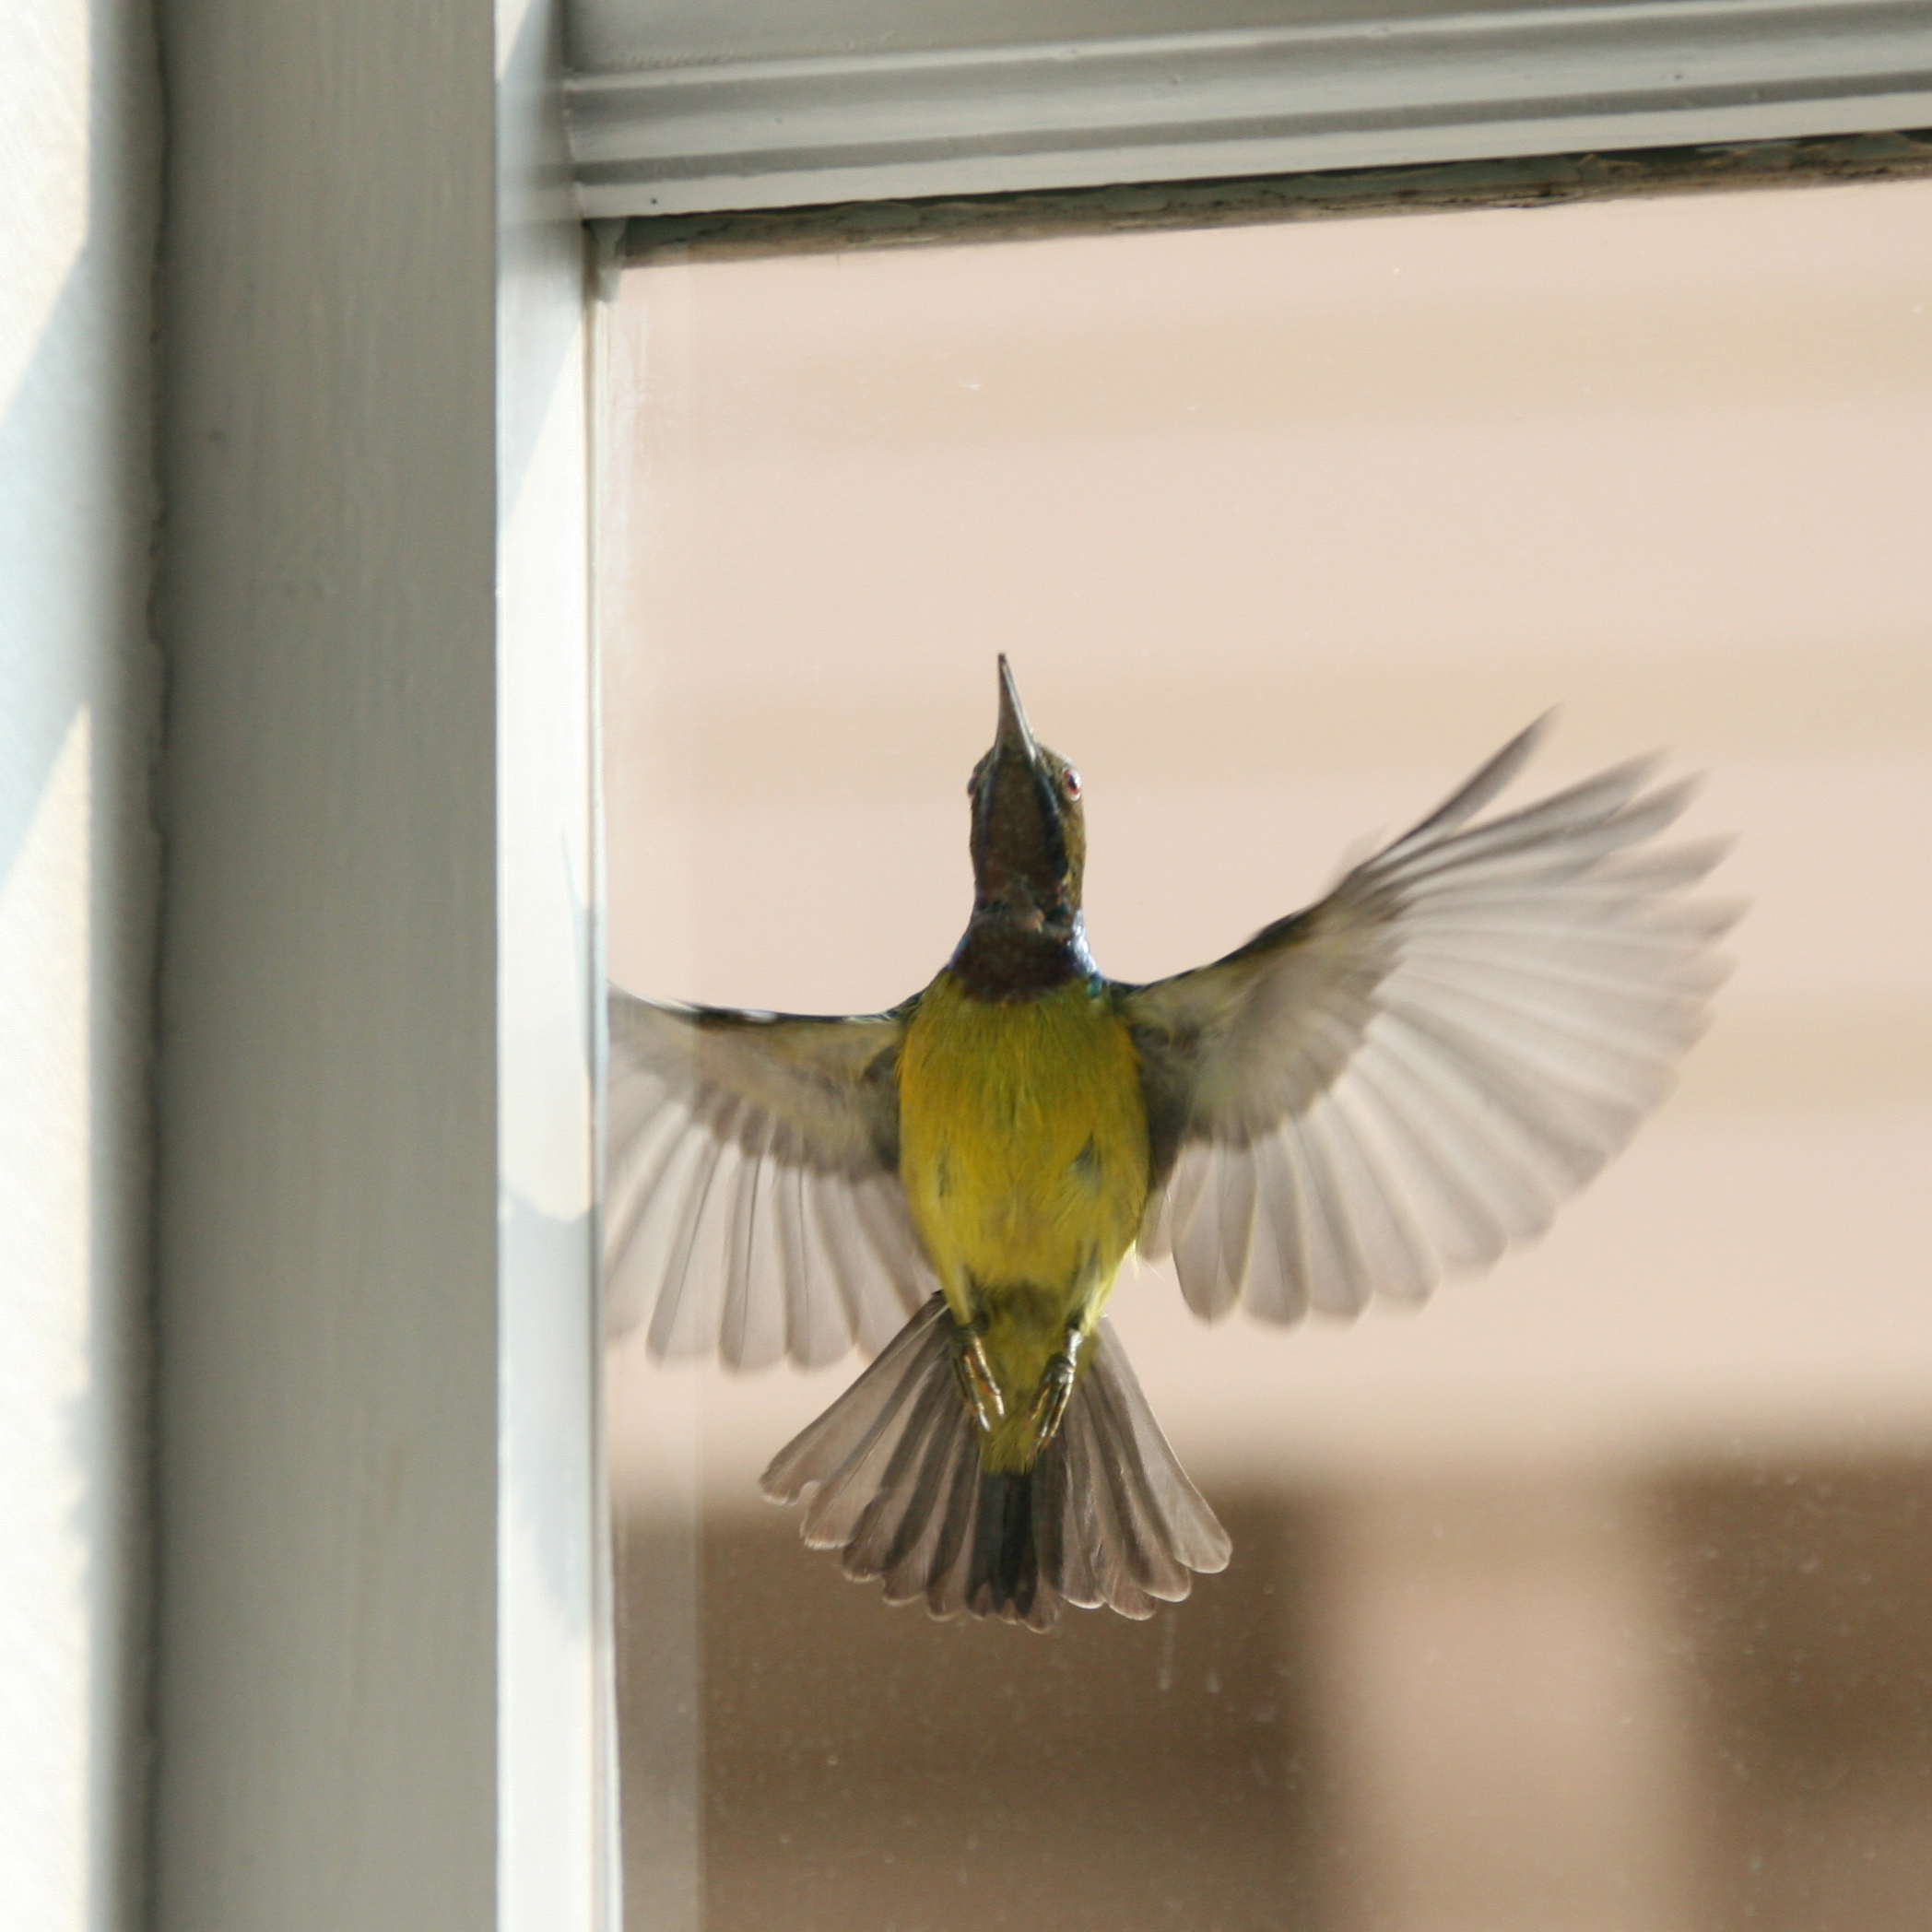 Птичка садится на окошко. Птица на подоконнике. Птицы под подоконником. Птица села на окно. Птицы сели на карниз.